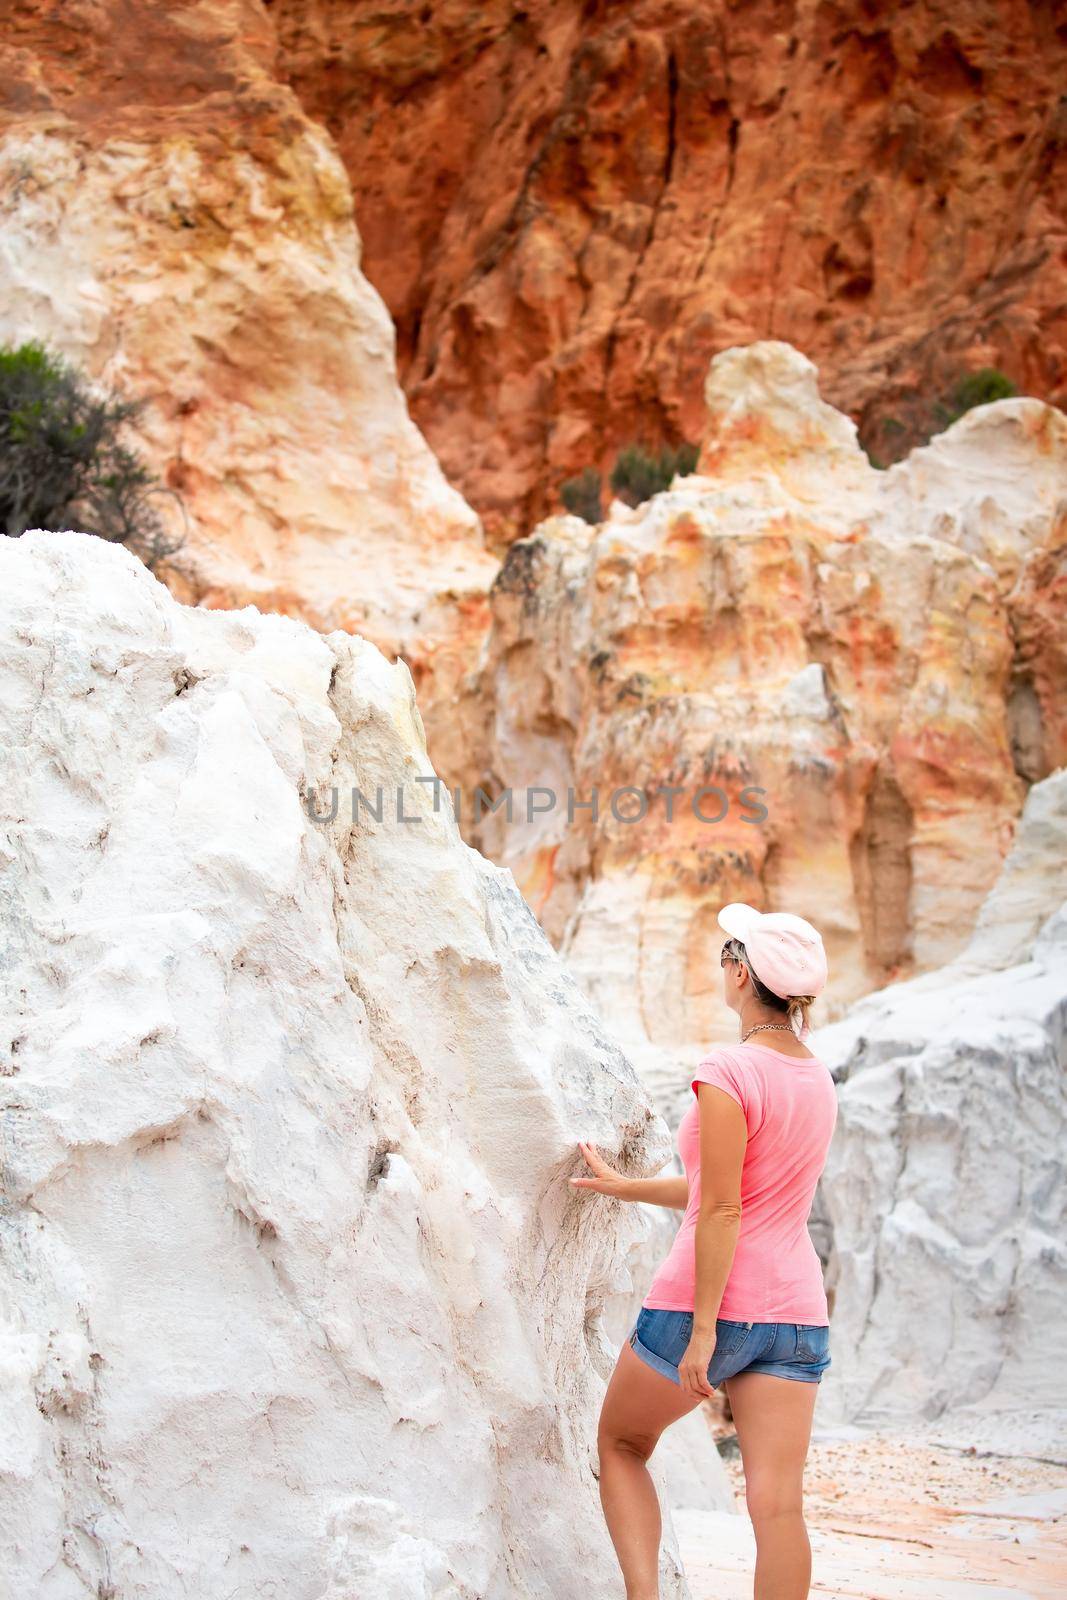 Female traveller exploring the remarkable red and white cliffs of Ben Boyd in Eden Australia